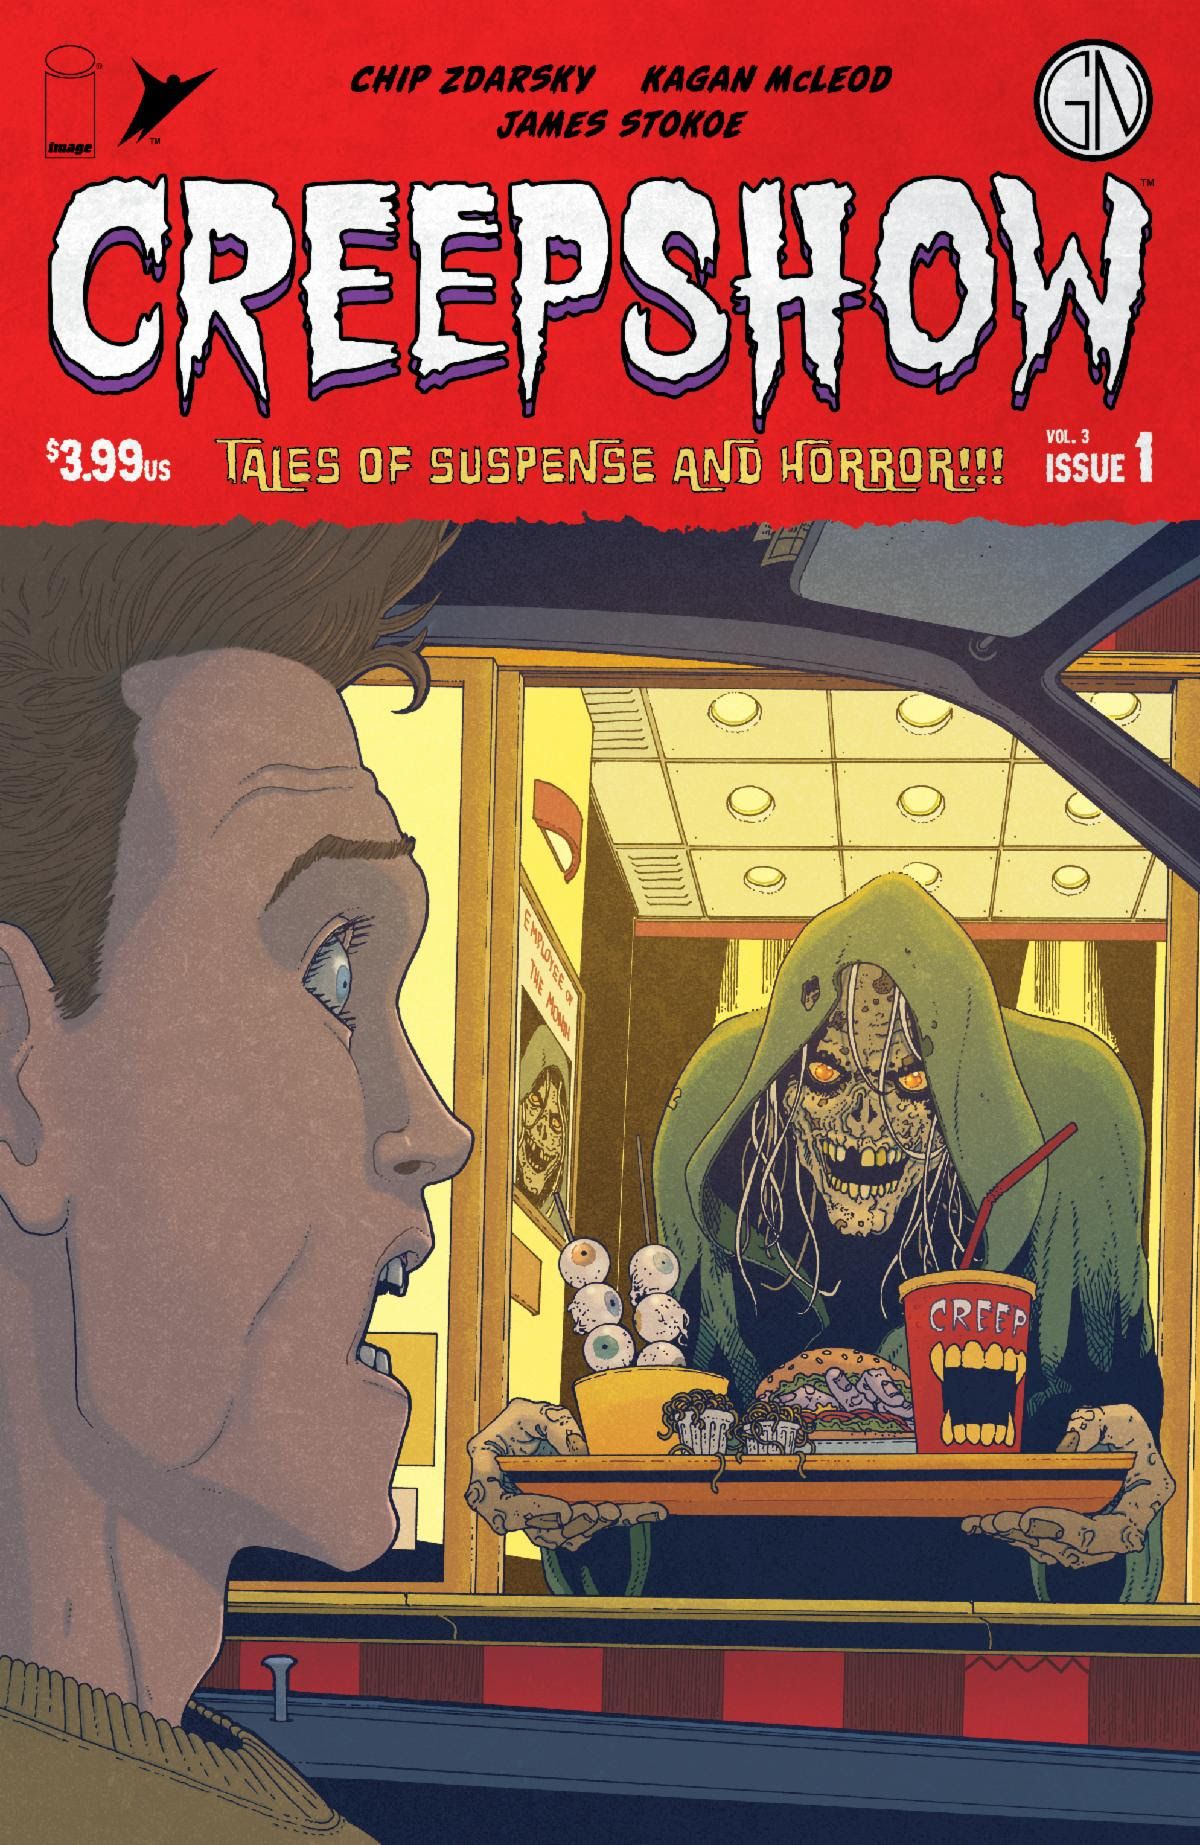 Creepshow Vol 3 #1 Cover A by Martin Morazzo and Chris Ohalloran